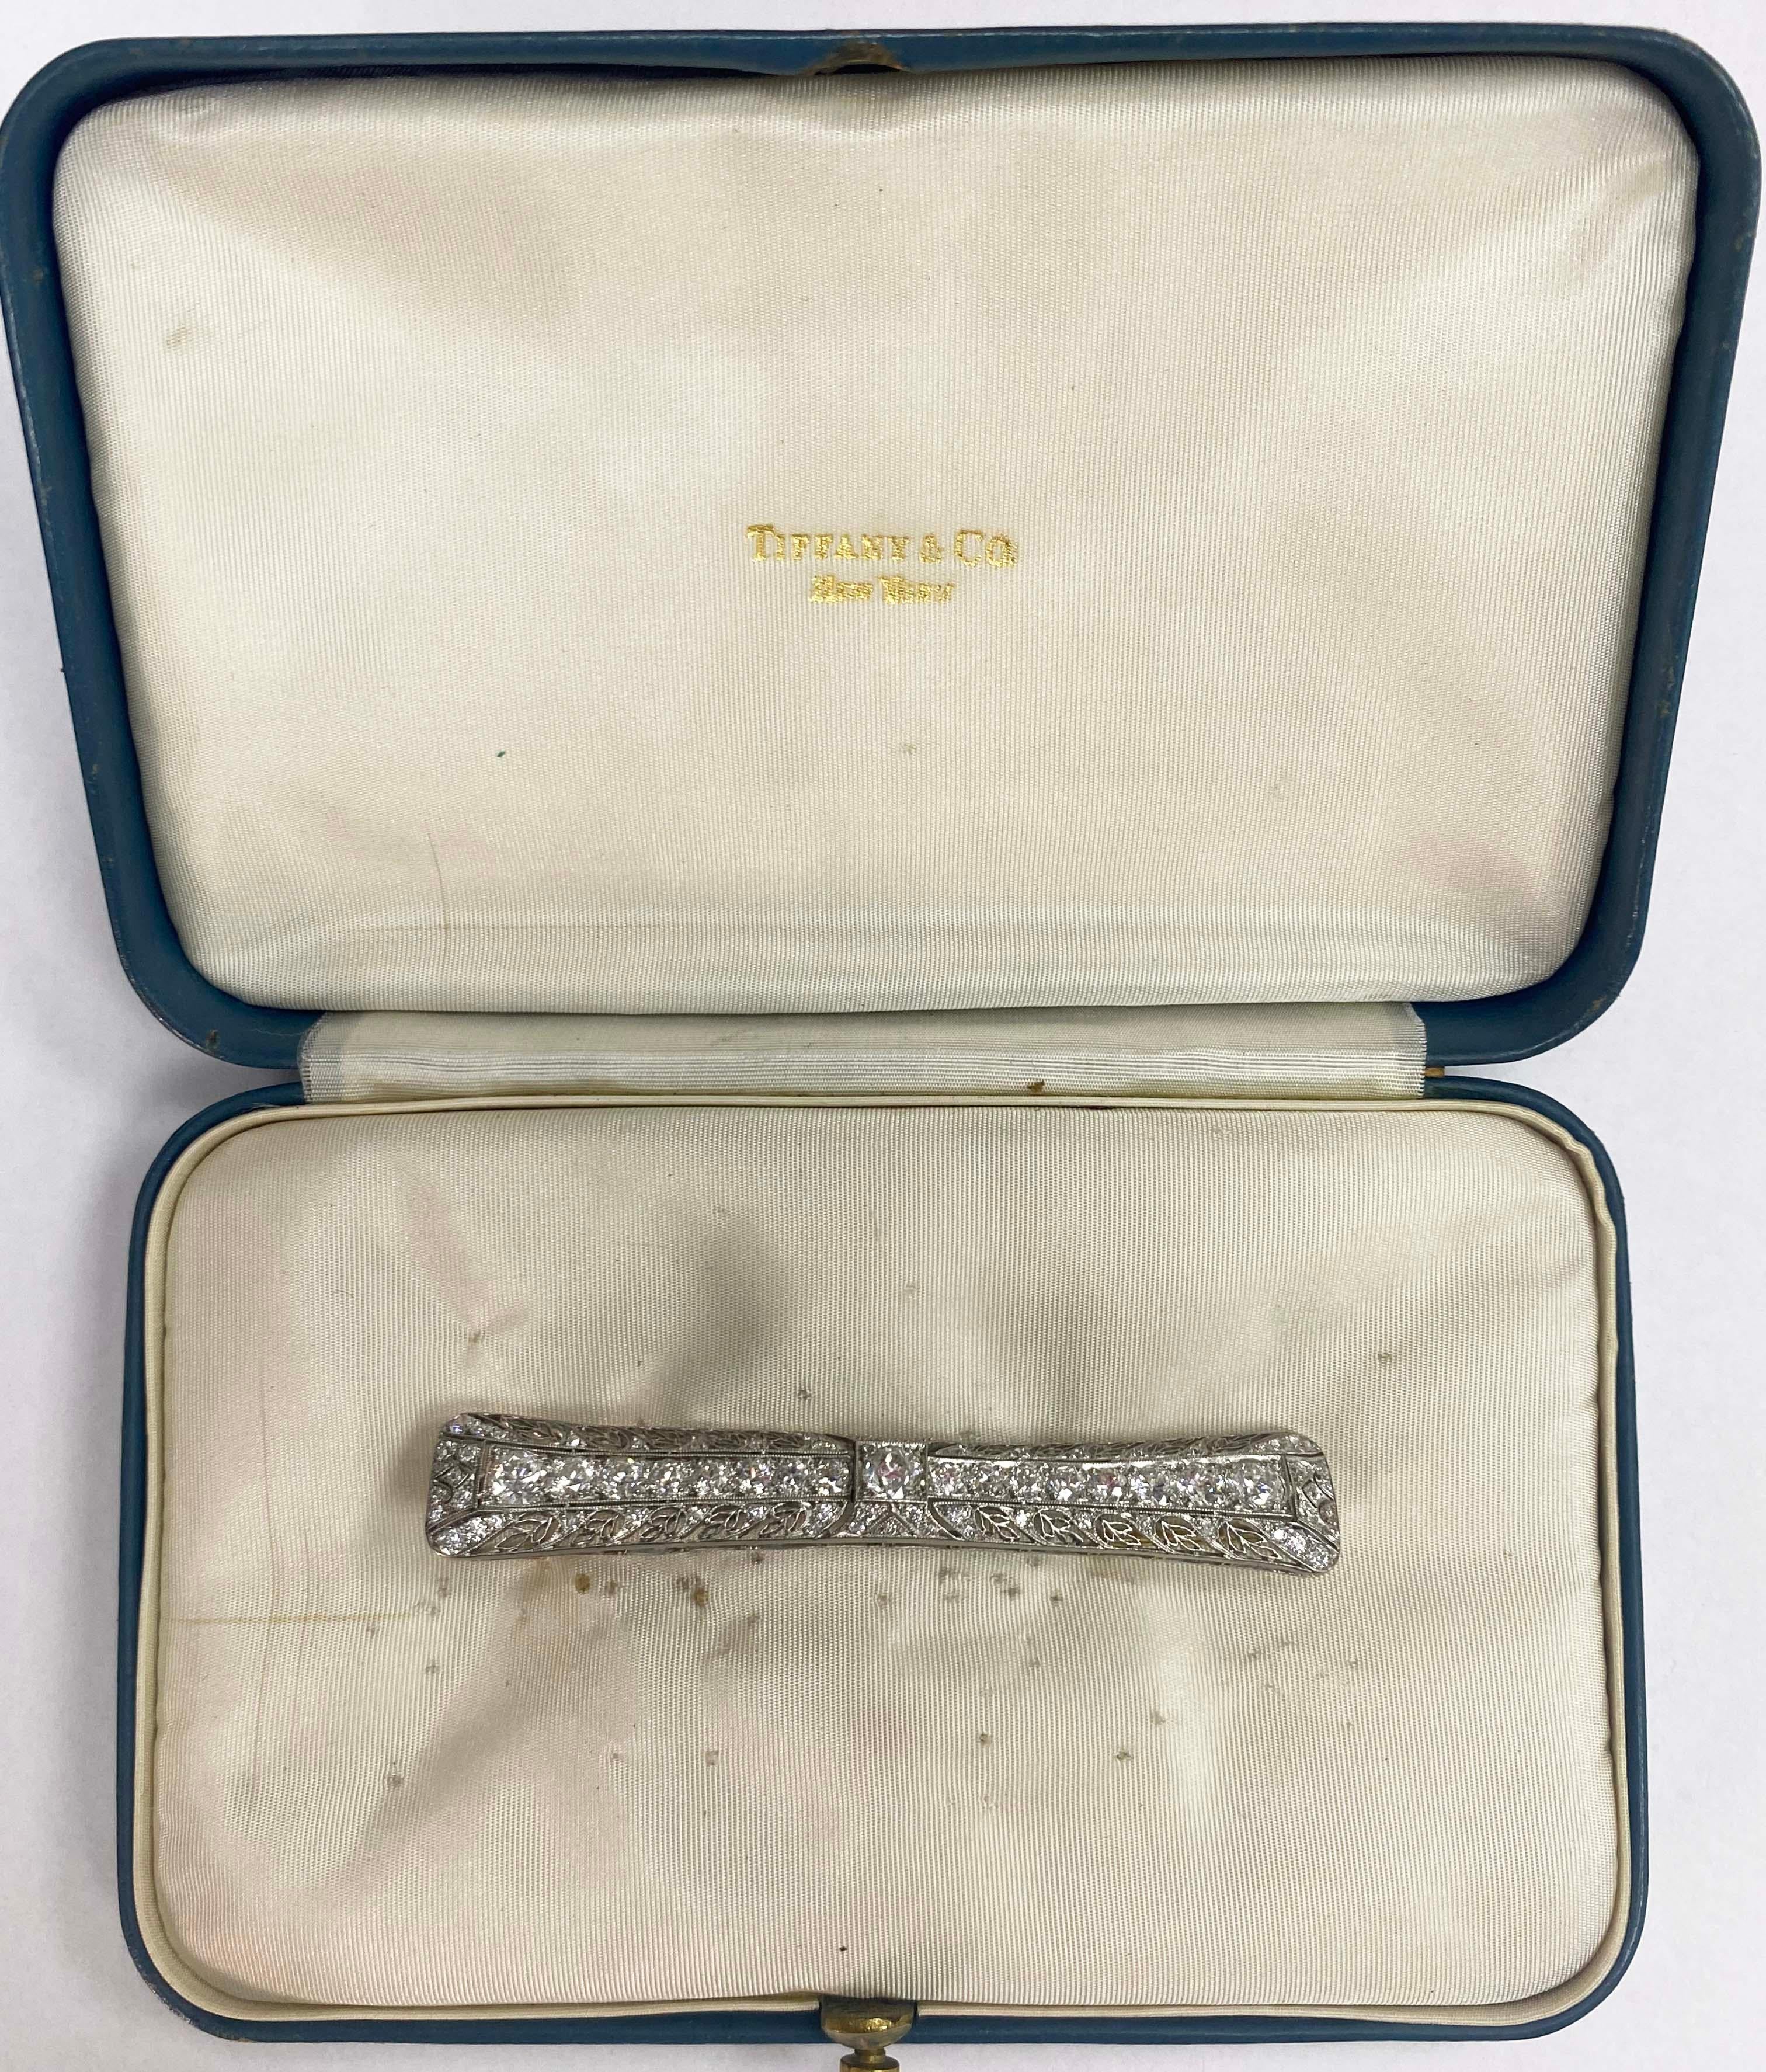 Tiffany & Co. Platinum Diamond Art Deco Bar Pin Brooch For Sale 1